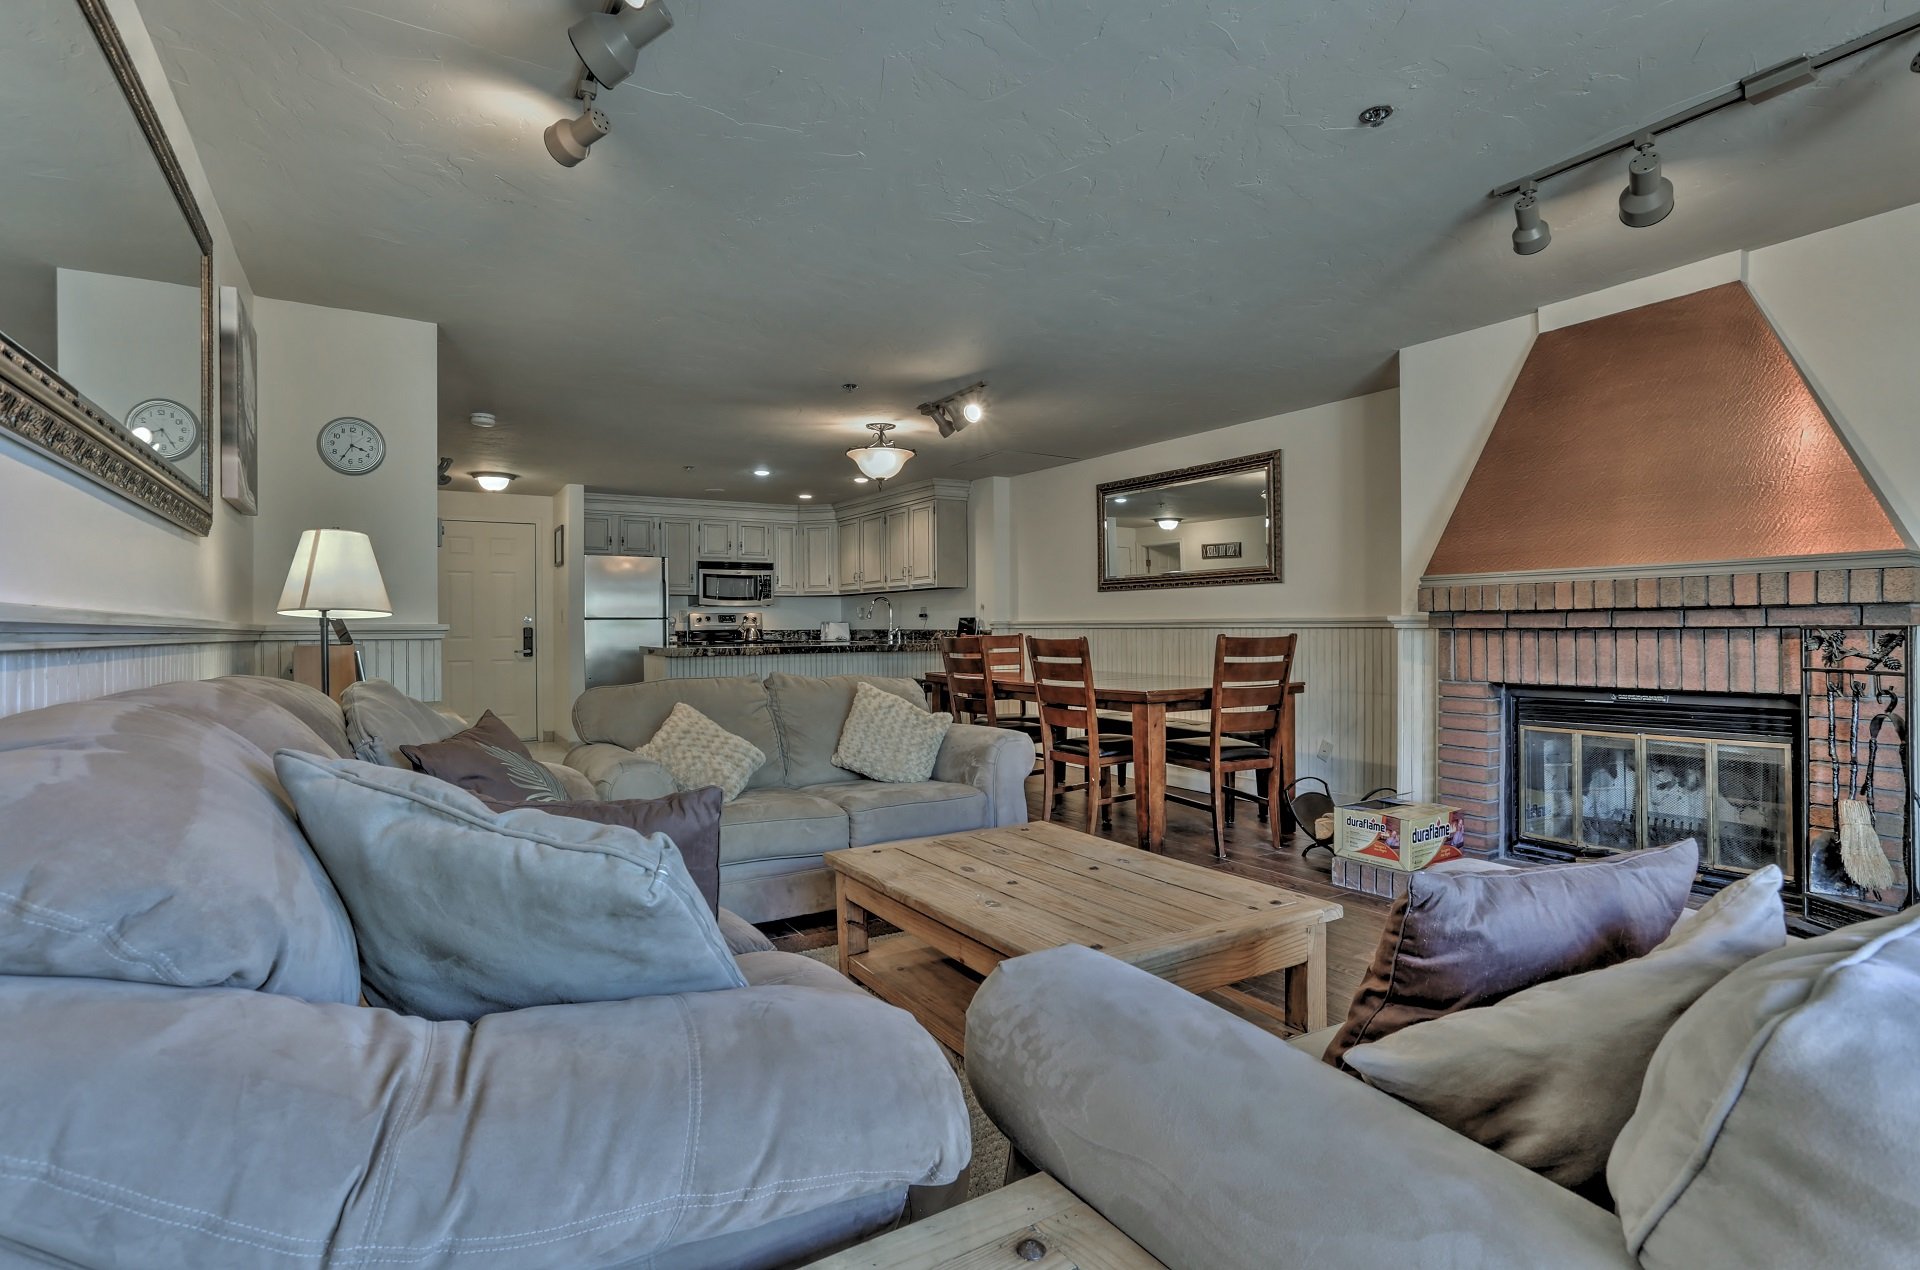 Kitchen,Dining room and Living room  at Snowblaze 202 - Park City